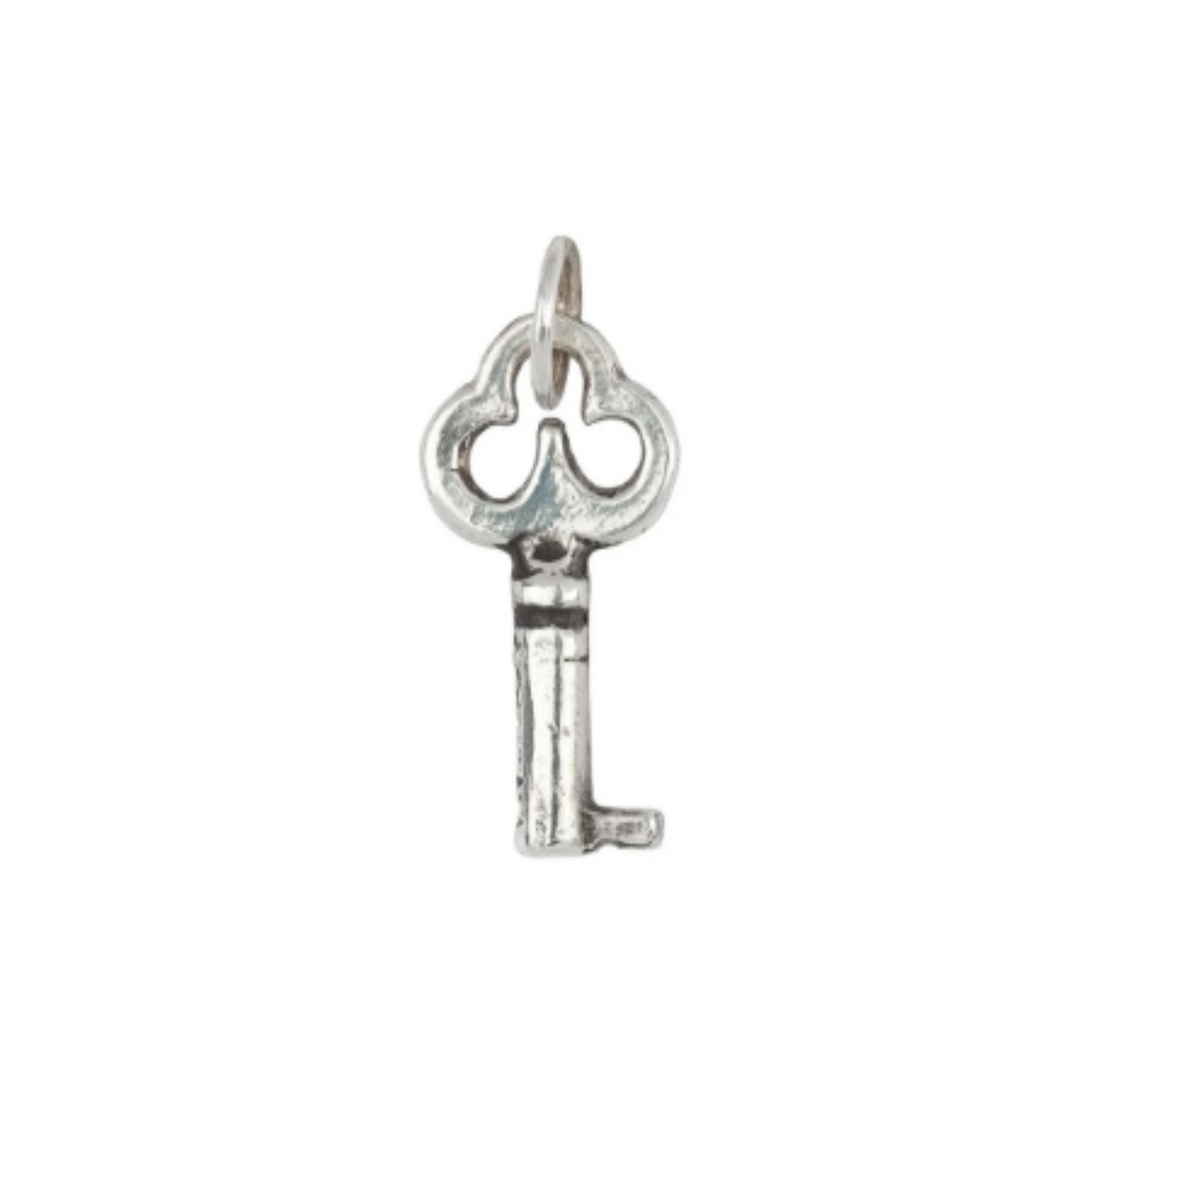 Pyrrha Clover Key Charm Necklace